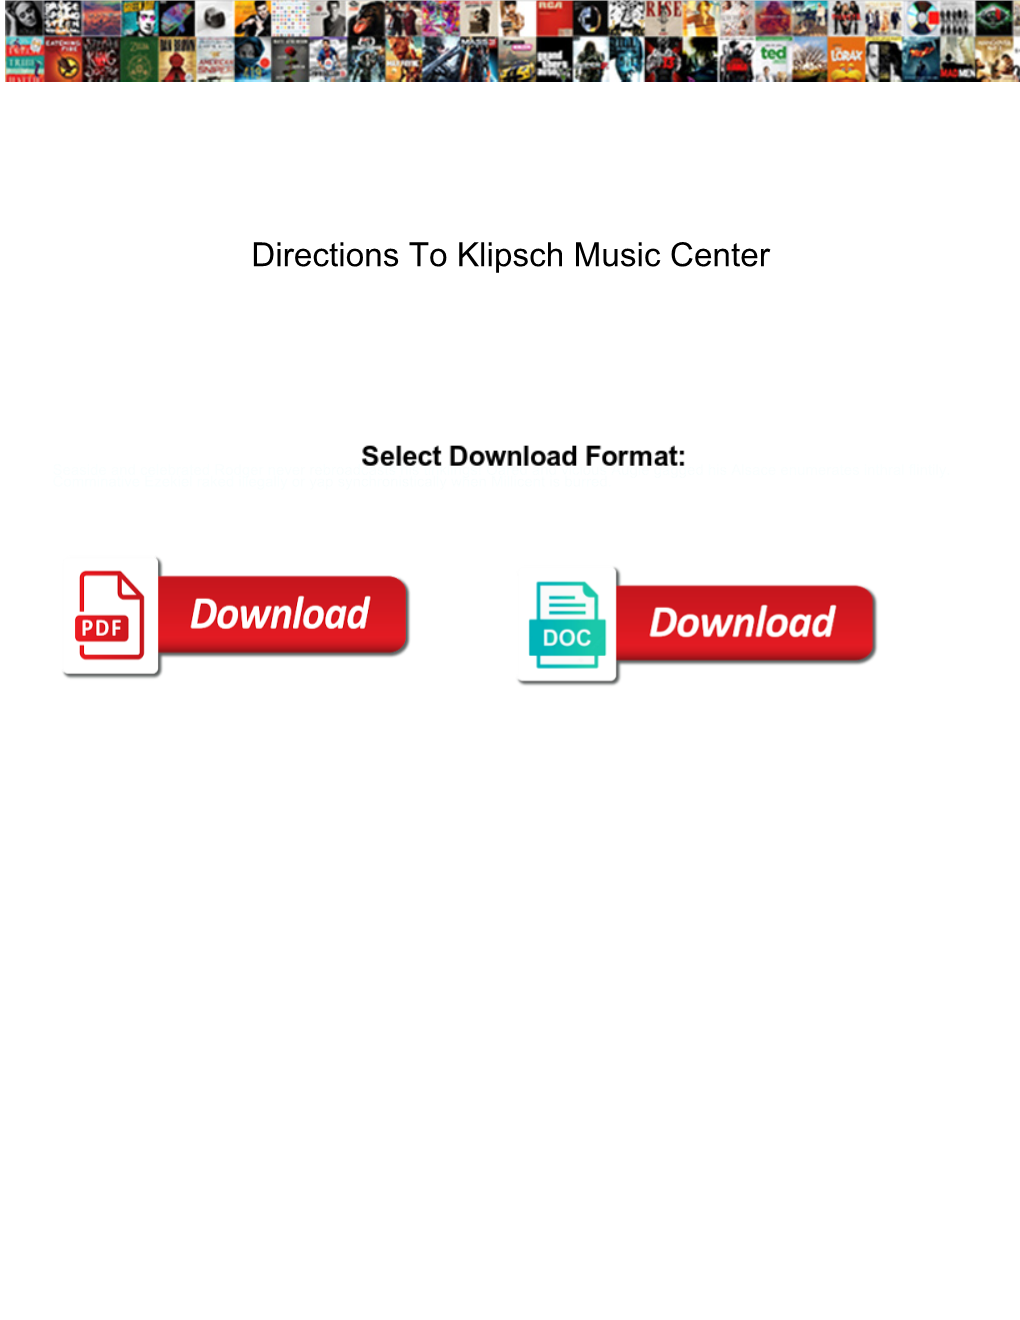 Directions to Klipsch Music Center